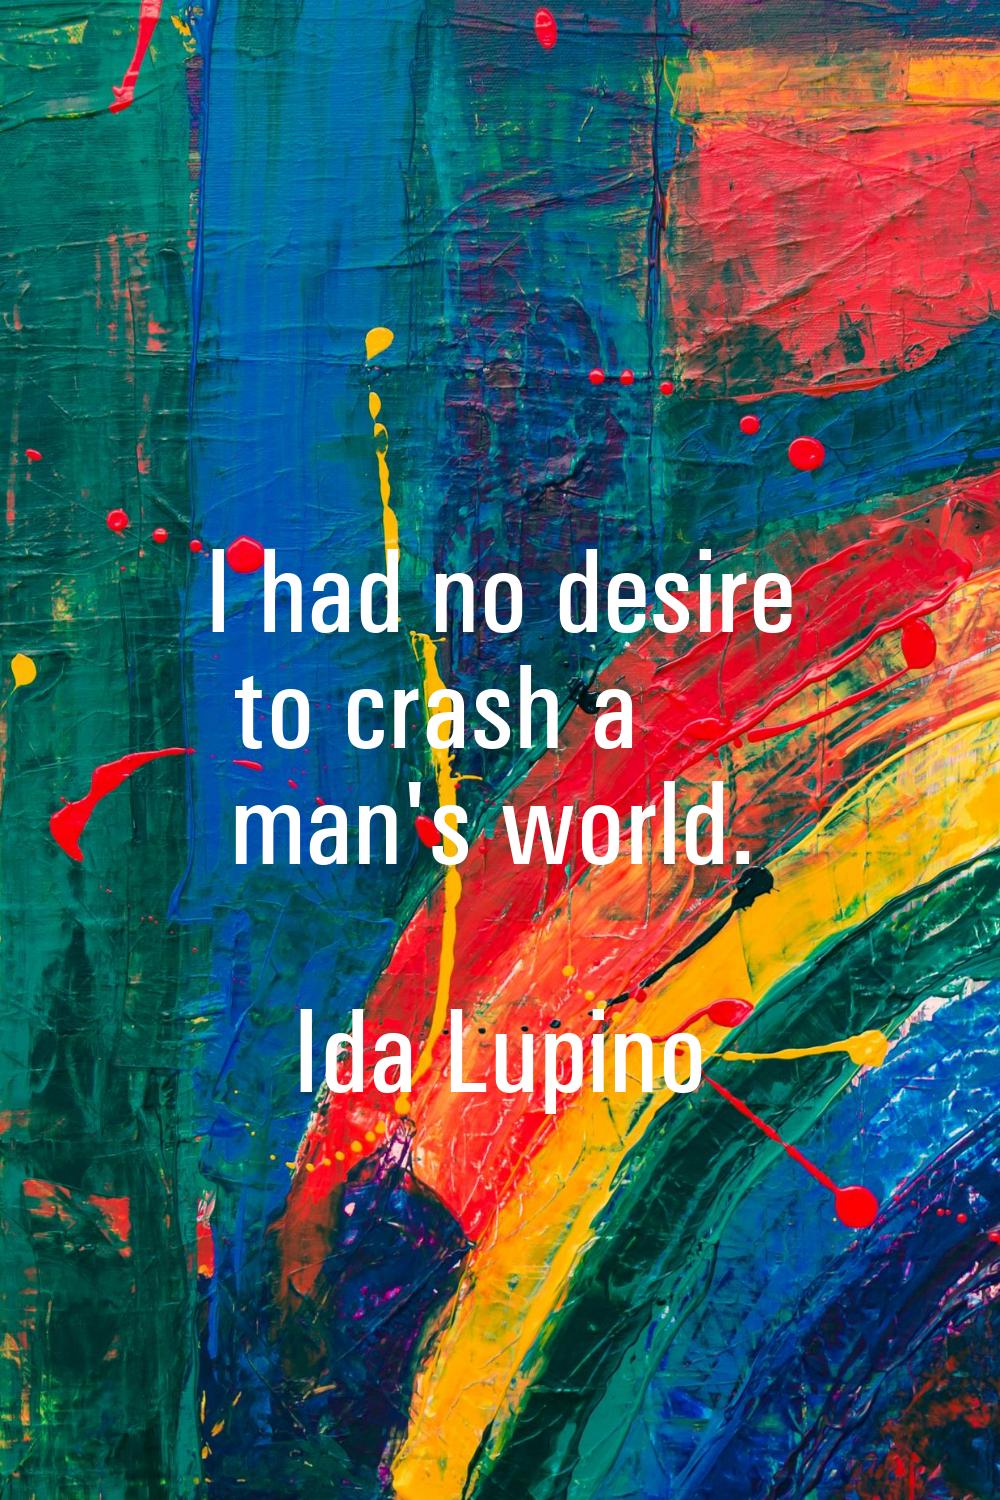 I had no desire to crash a man's world.